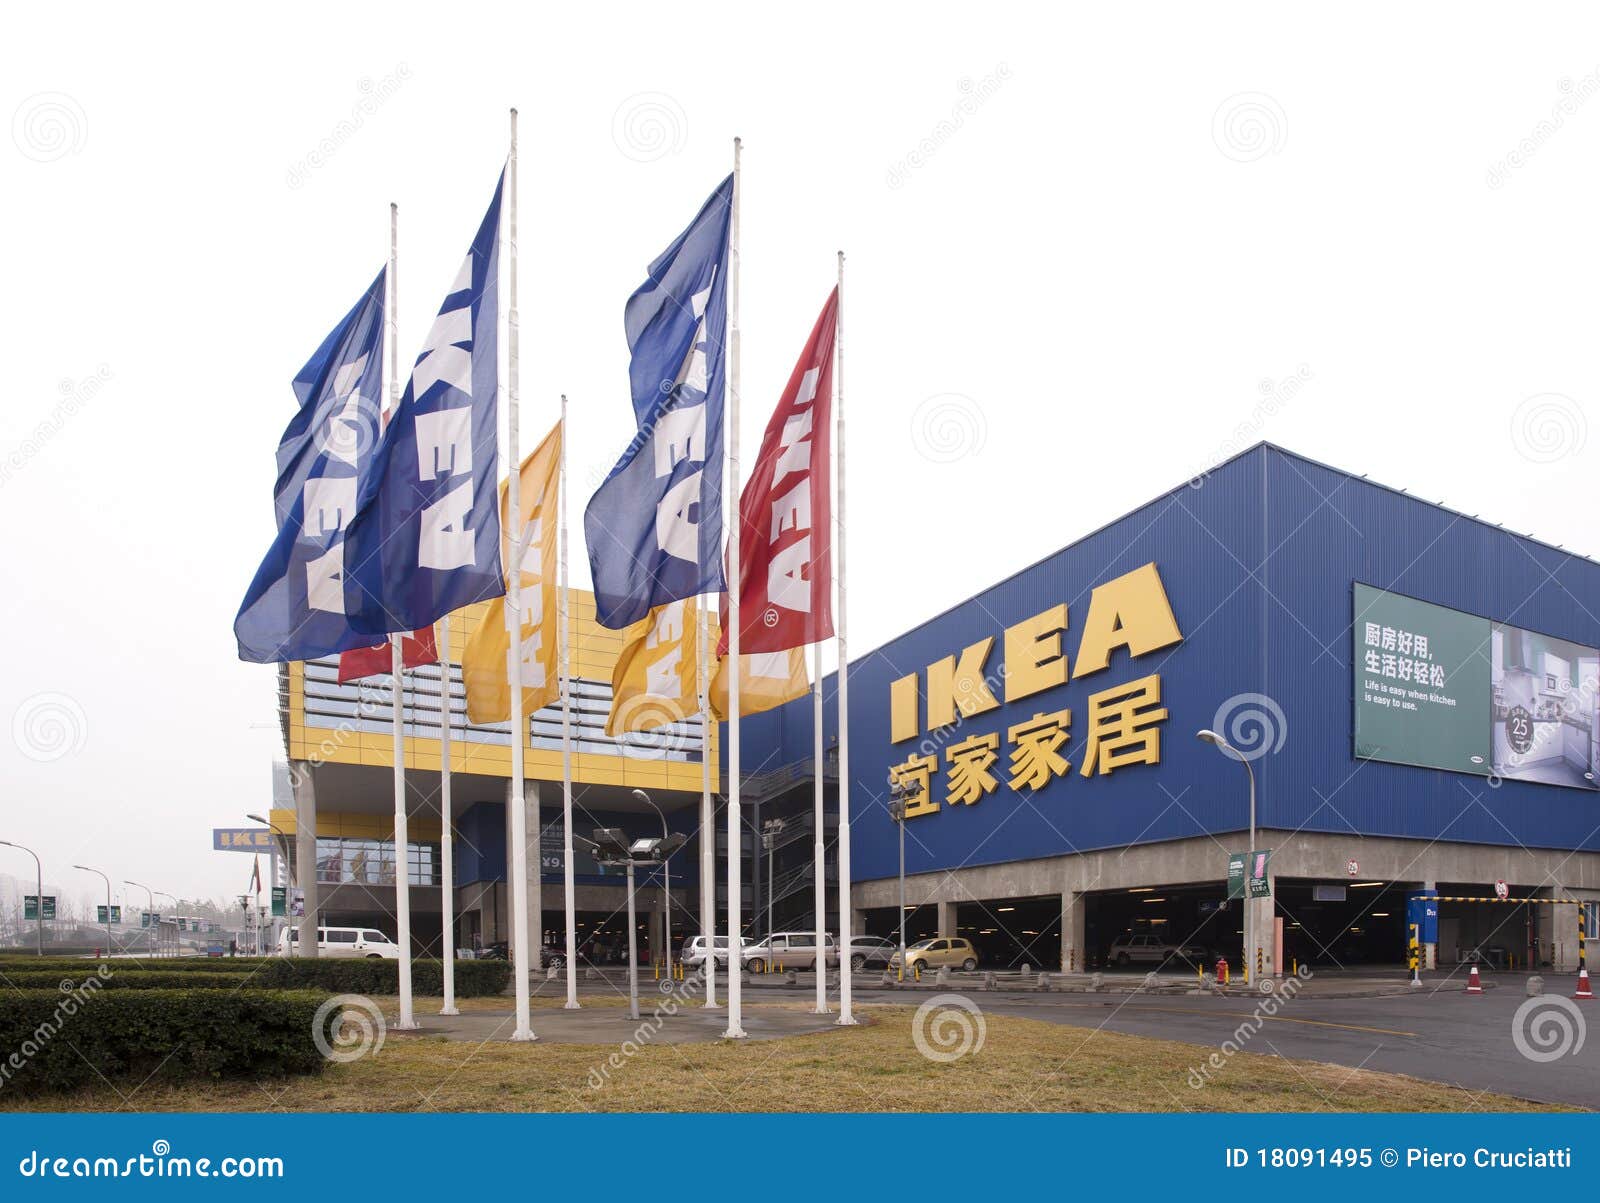 China Ikea Store In Chengdu Editorial Image Image Of